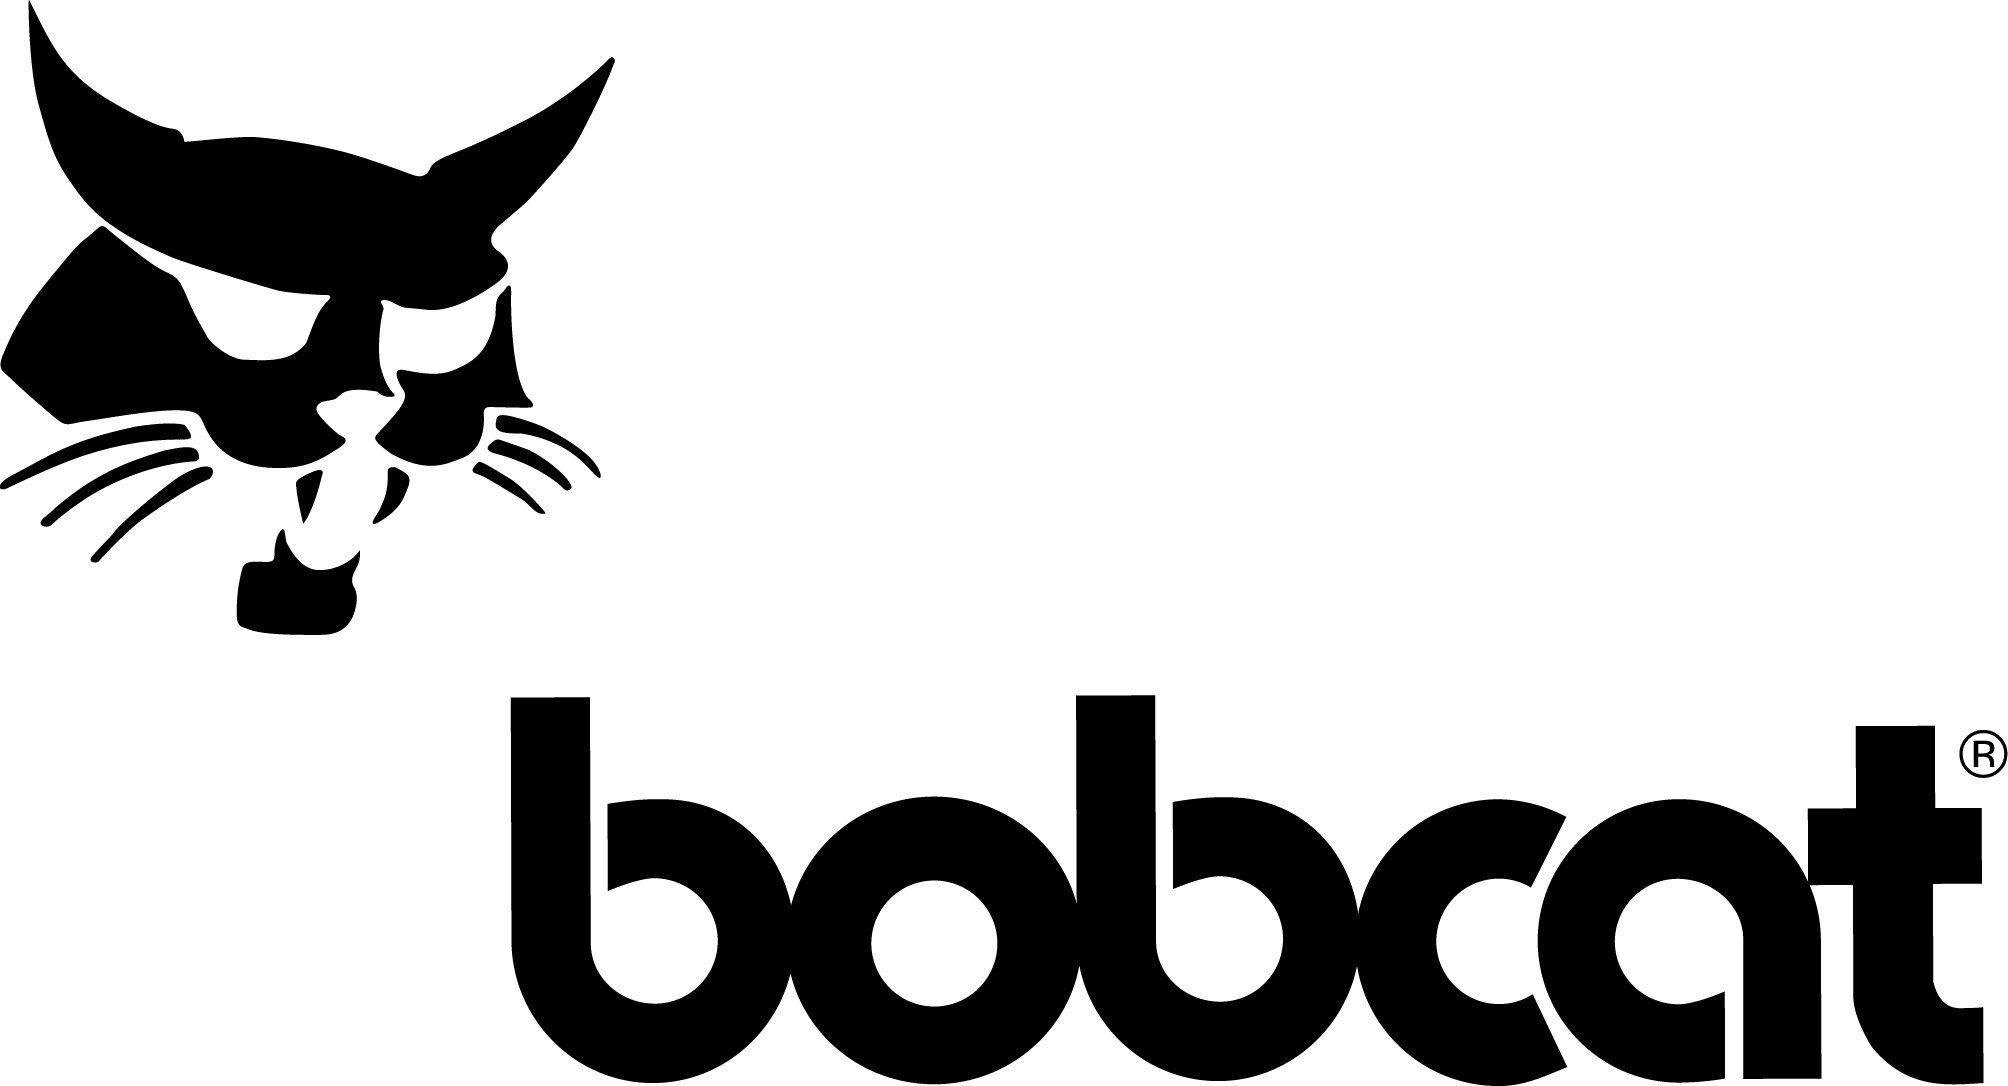 Bobcat Company Logo - Designing A New Breed Of Skid Steer Loaders